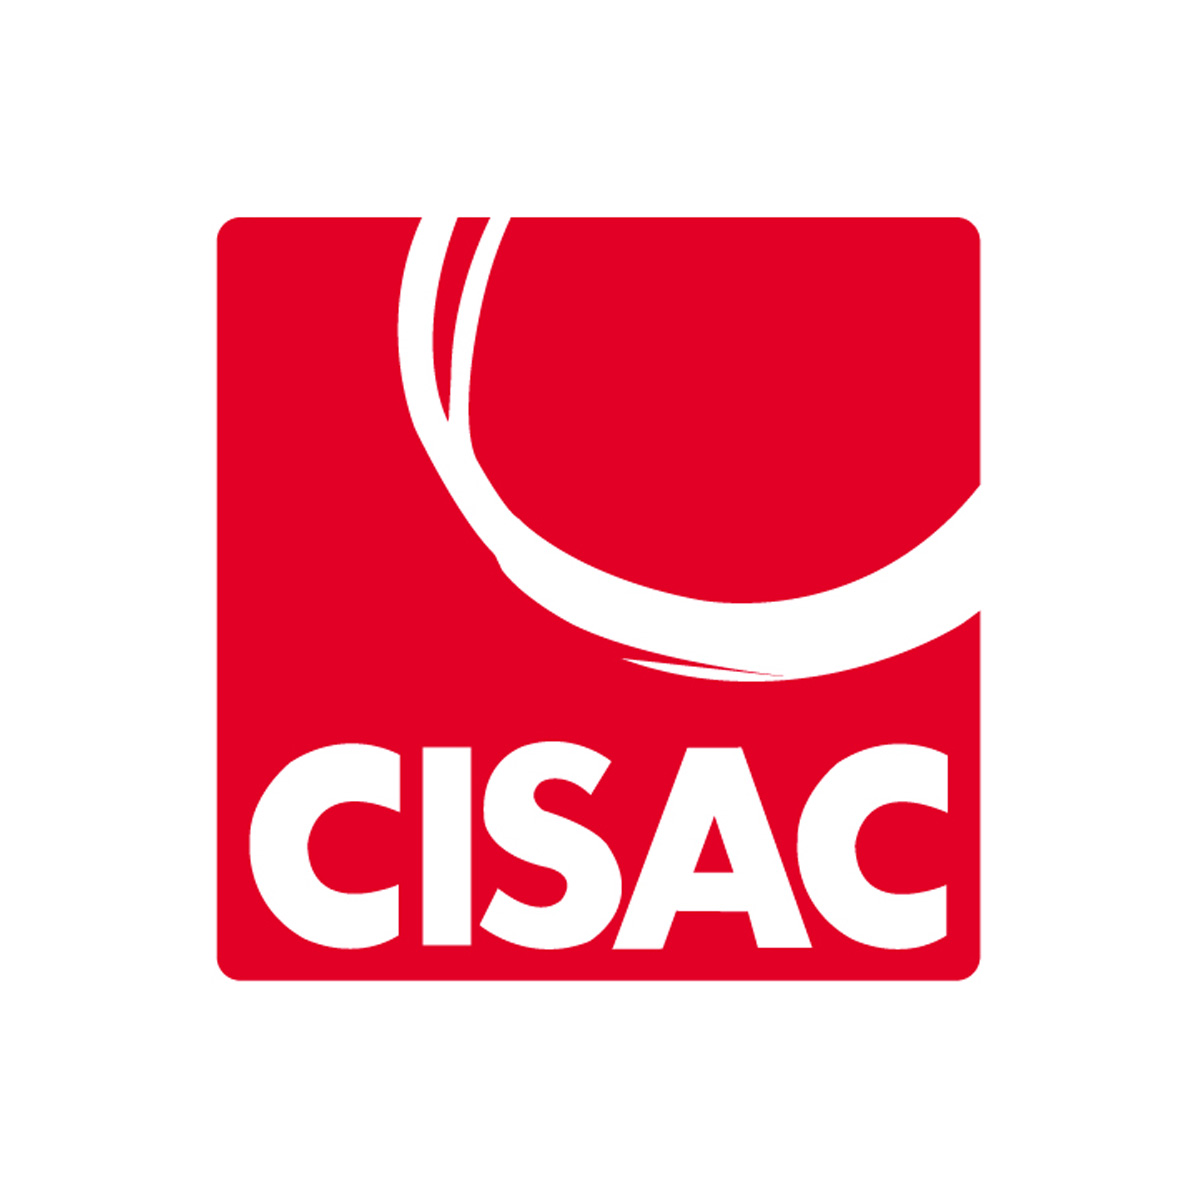 Cisac-Logo.jpg